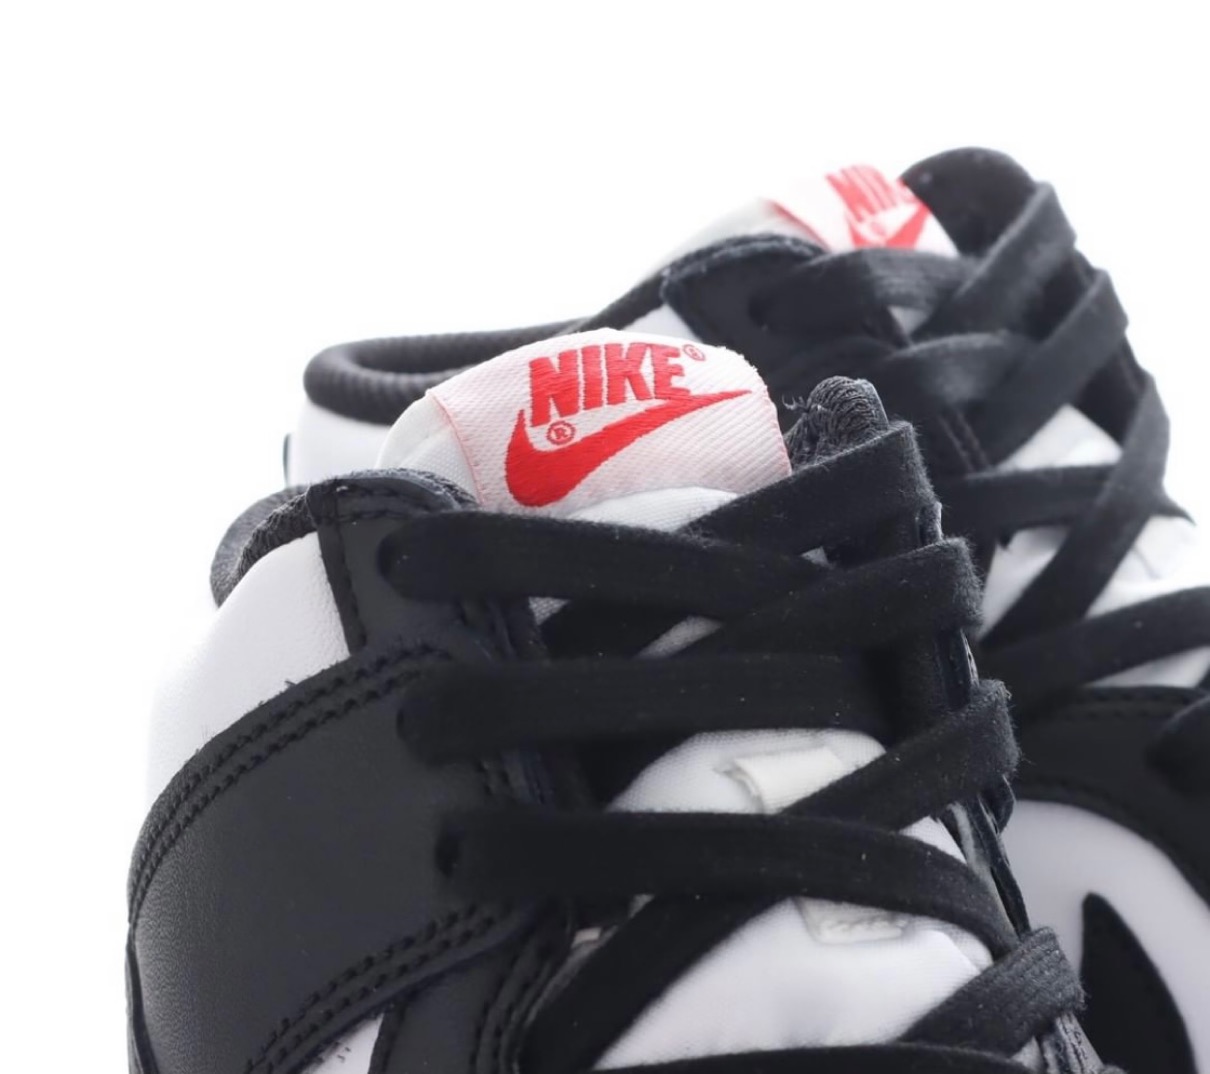 Nike Dunk High Retro White Black が国内5月23日に発売予定 Up To Date